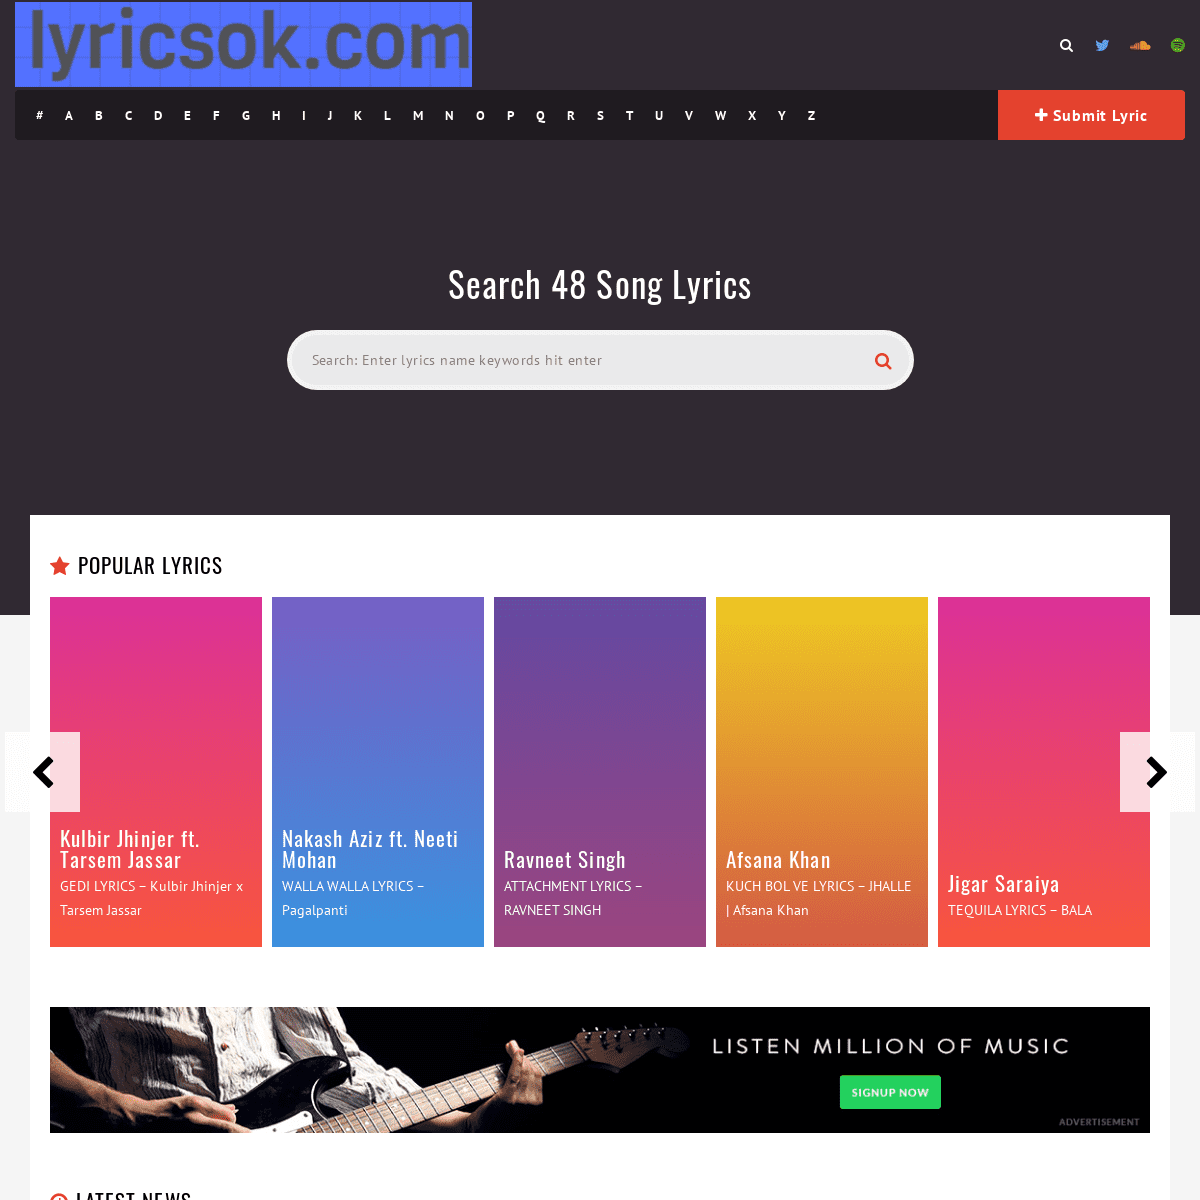 A complete backup of lyricsok.com